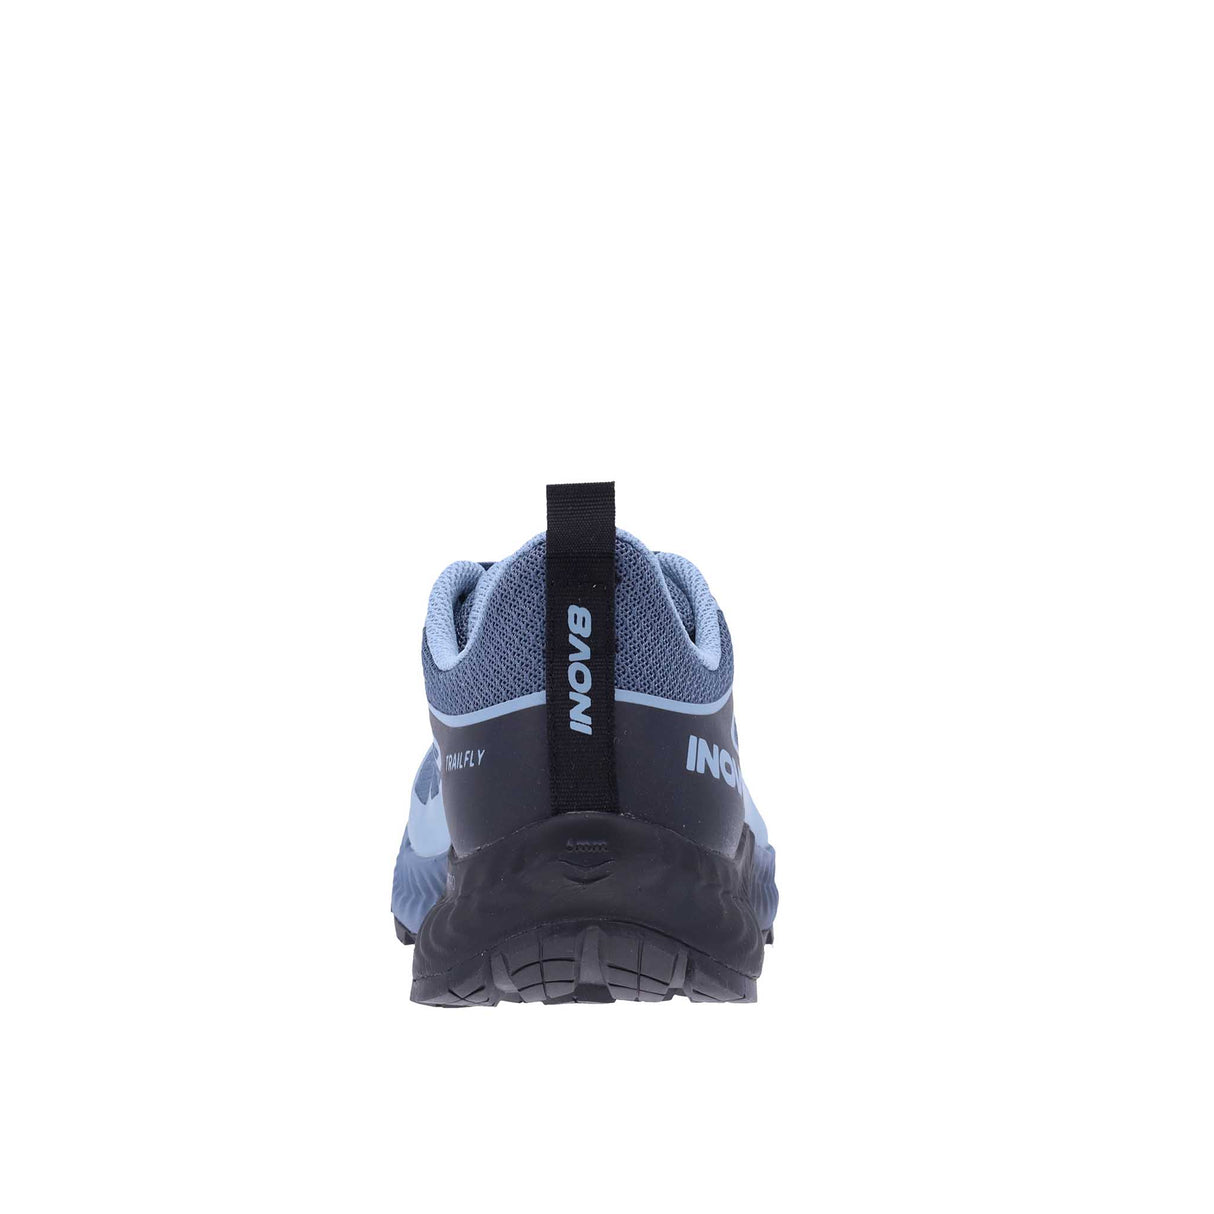 Inov-8 TrailFly souliers de course trail femme talon - Blue Grey/Black/Slate